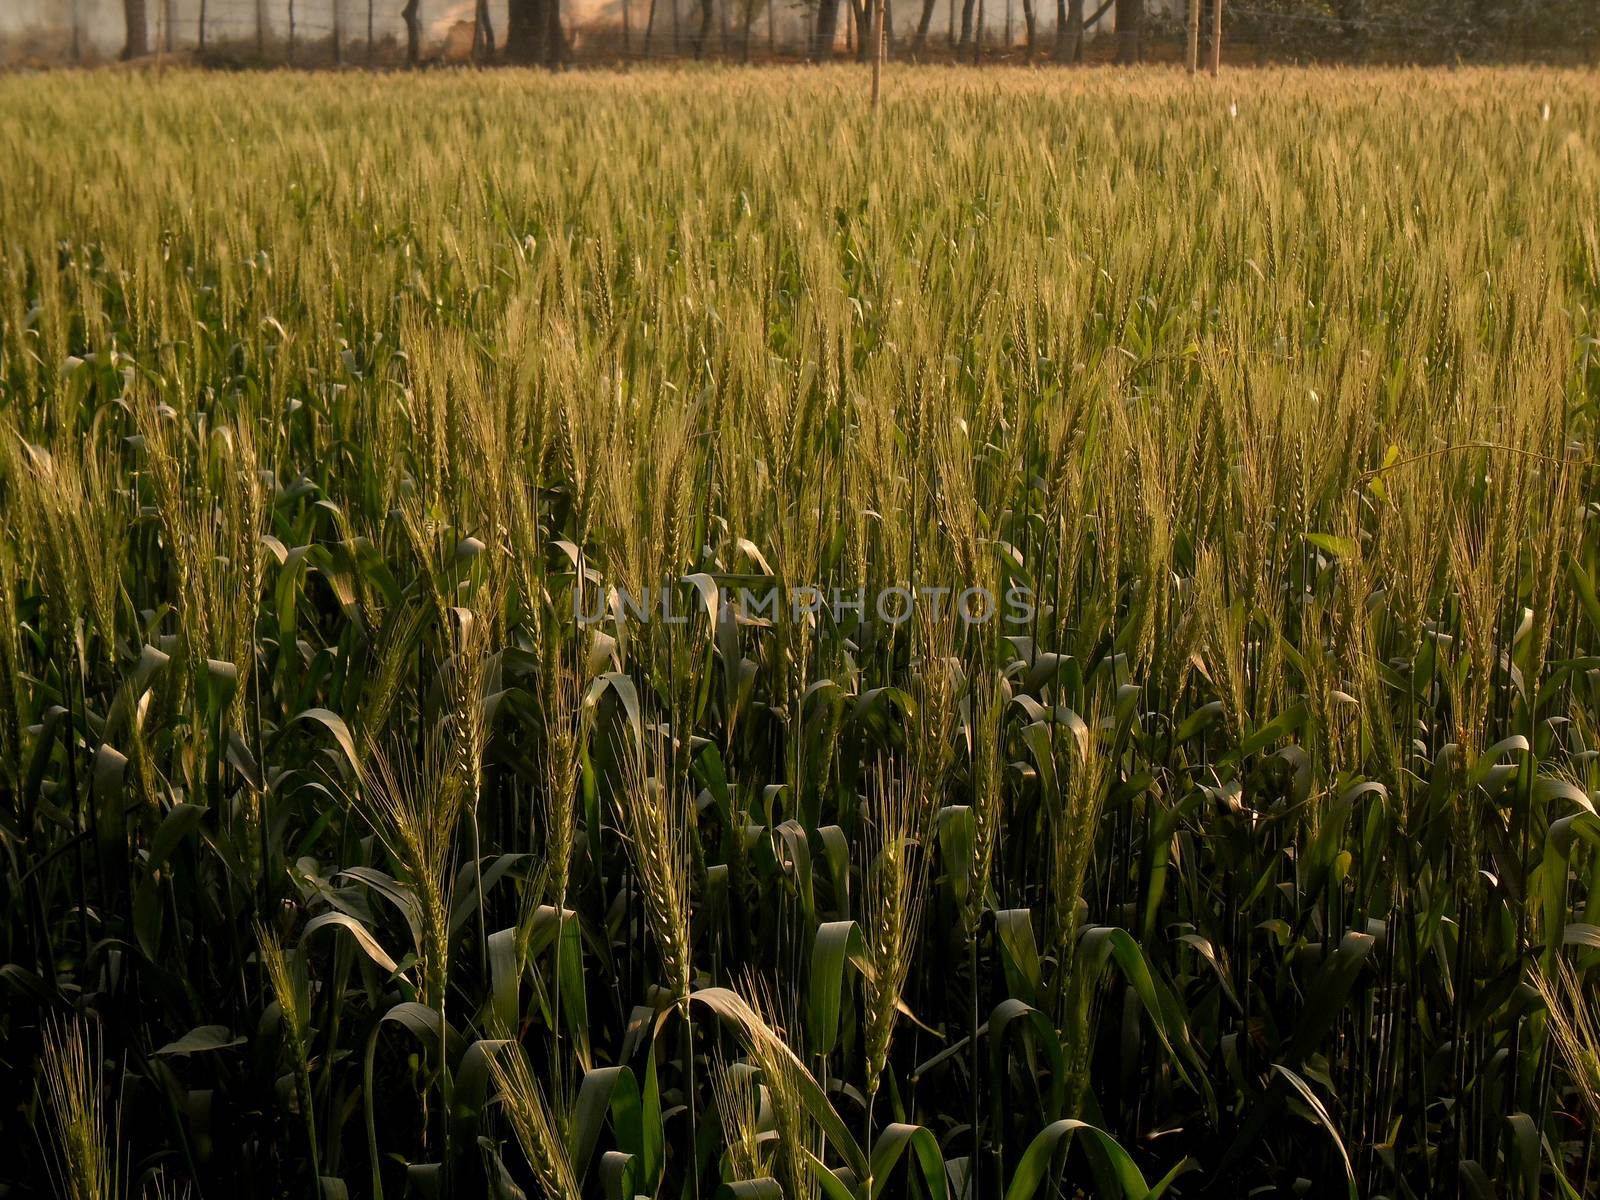 The wheat field by shawlinmohd